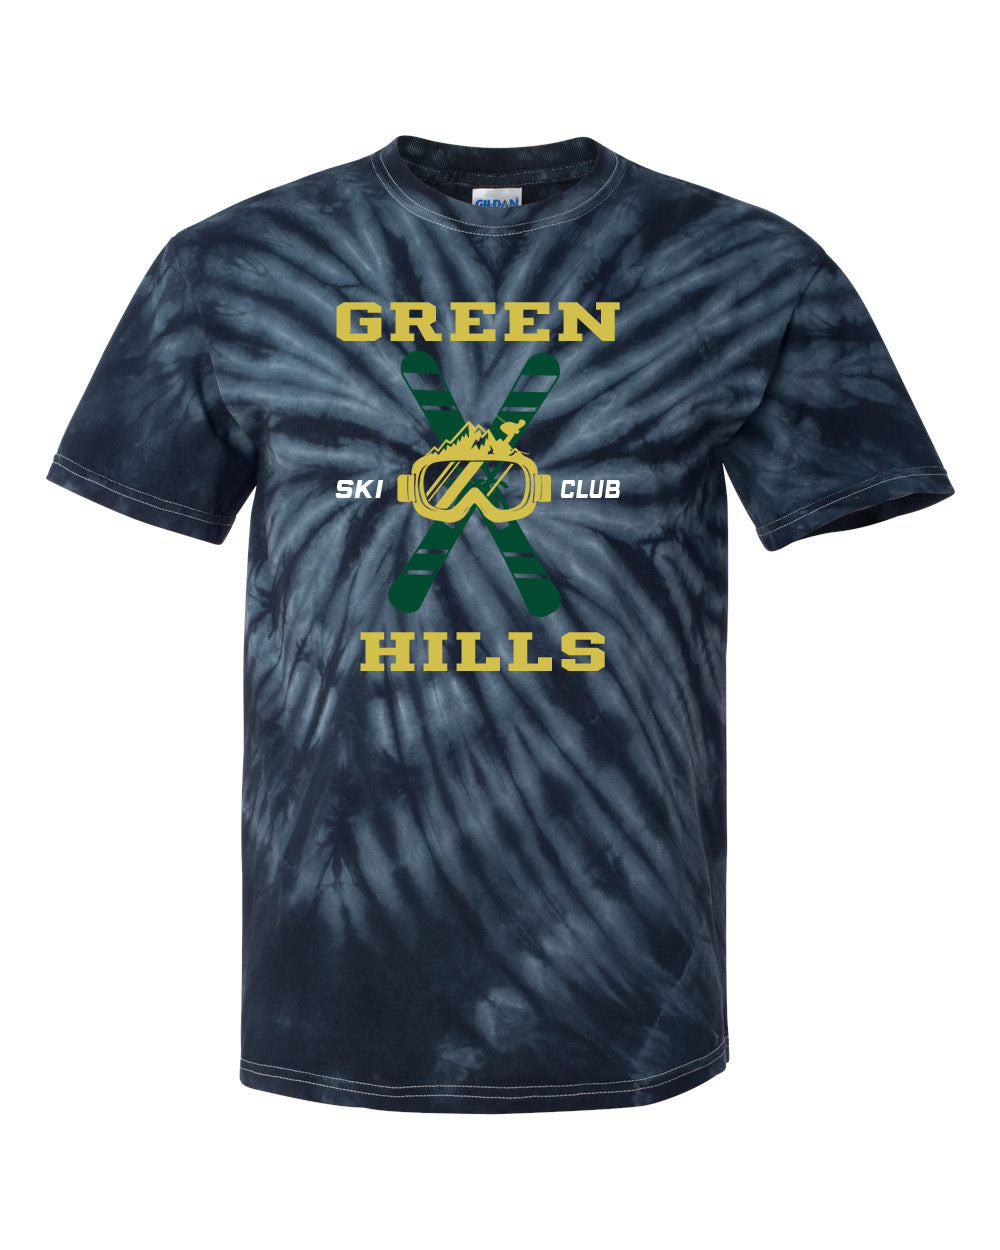 Green Hills Ski Club Tie Dye t-shirt Design 2